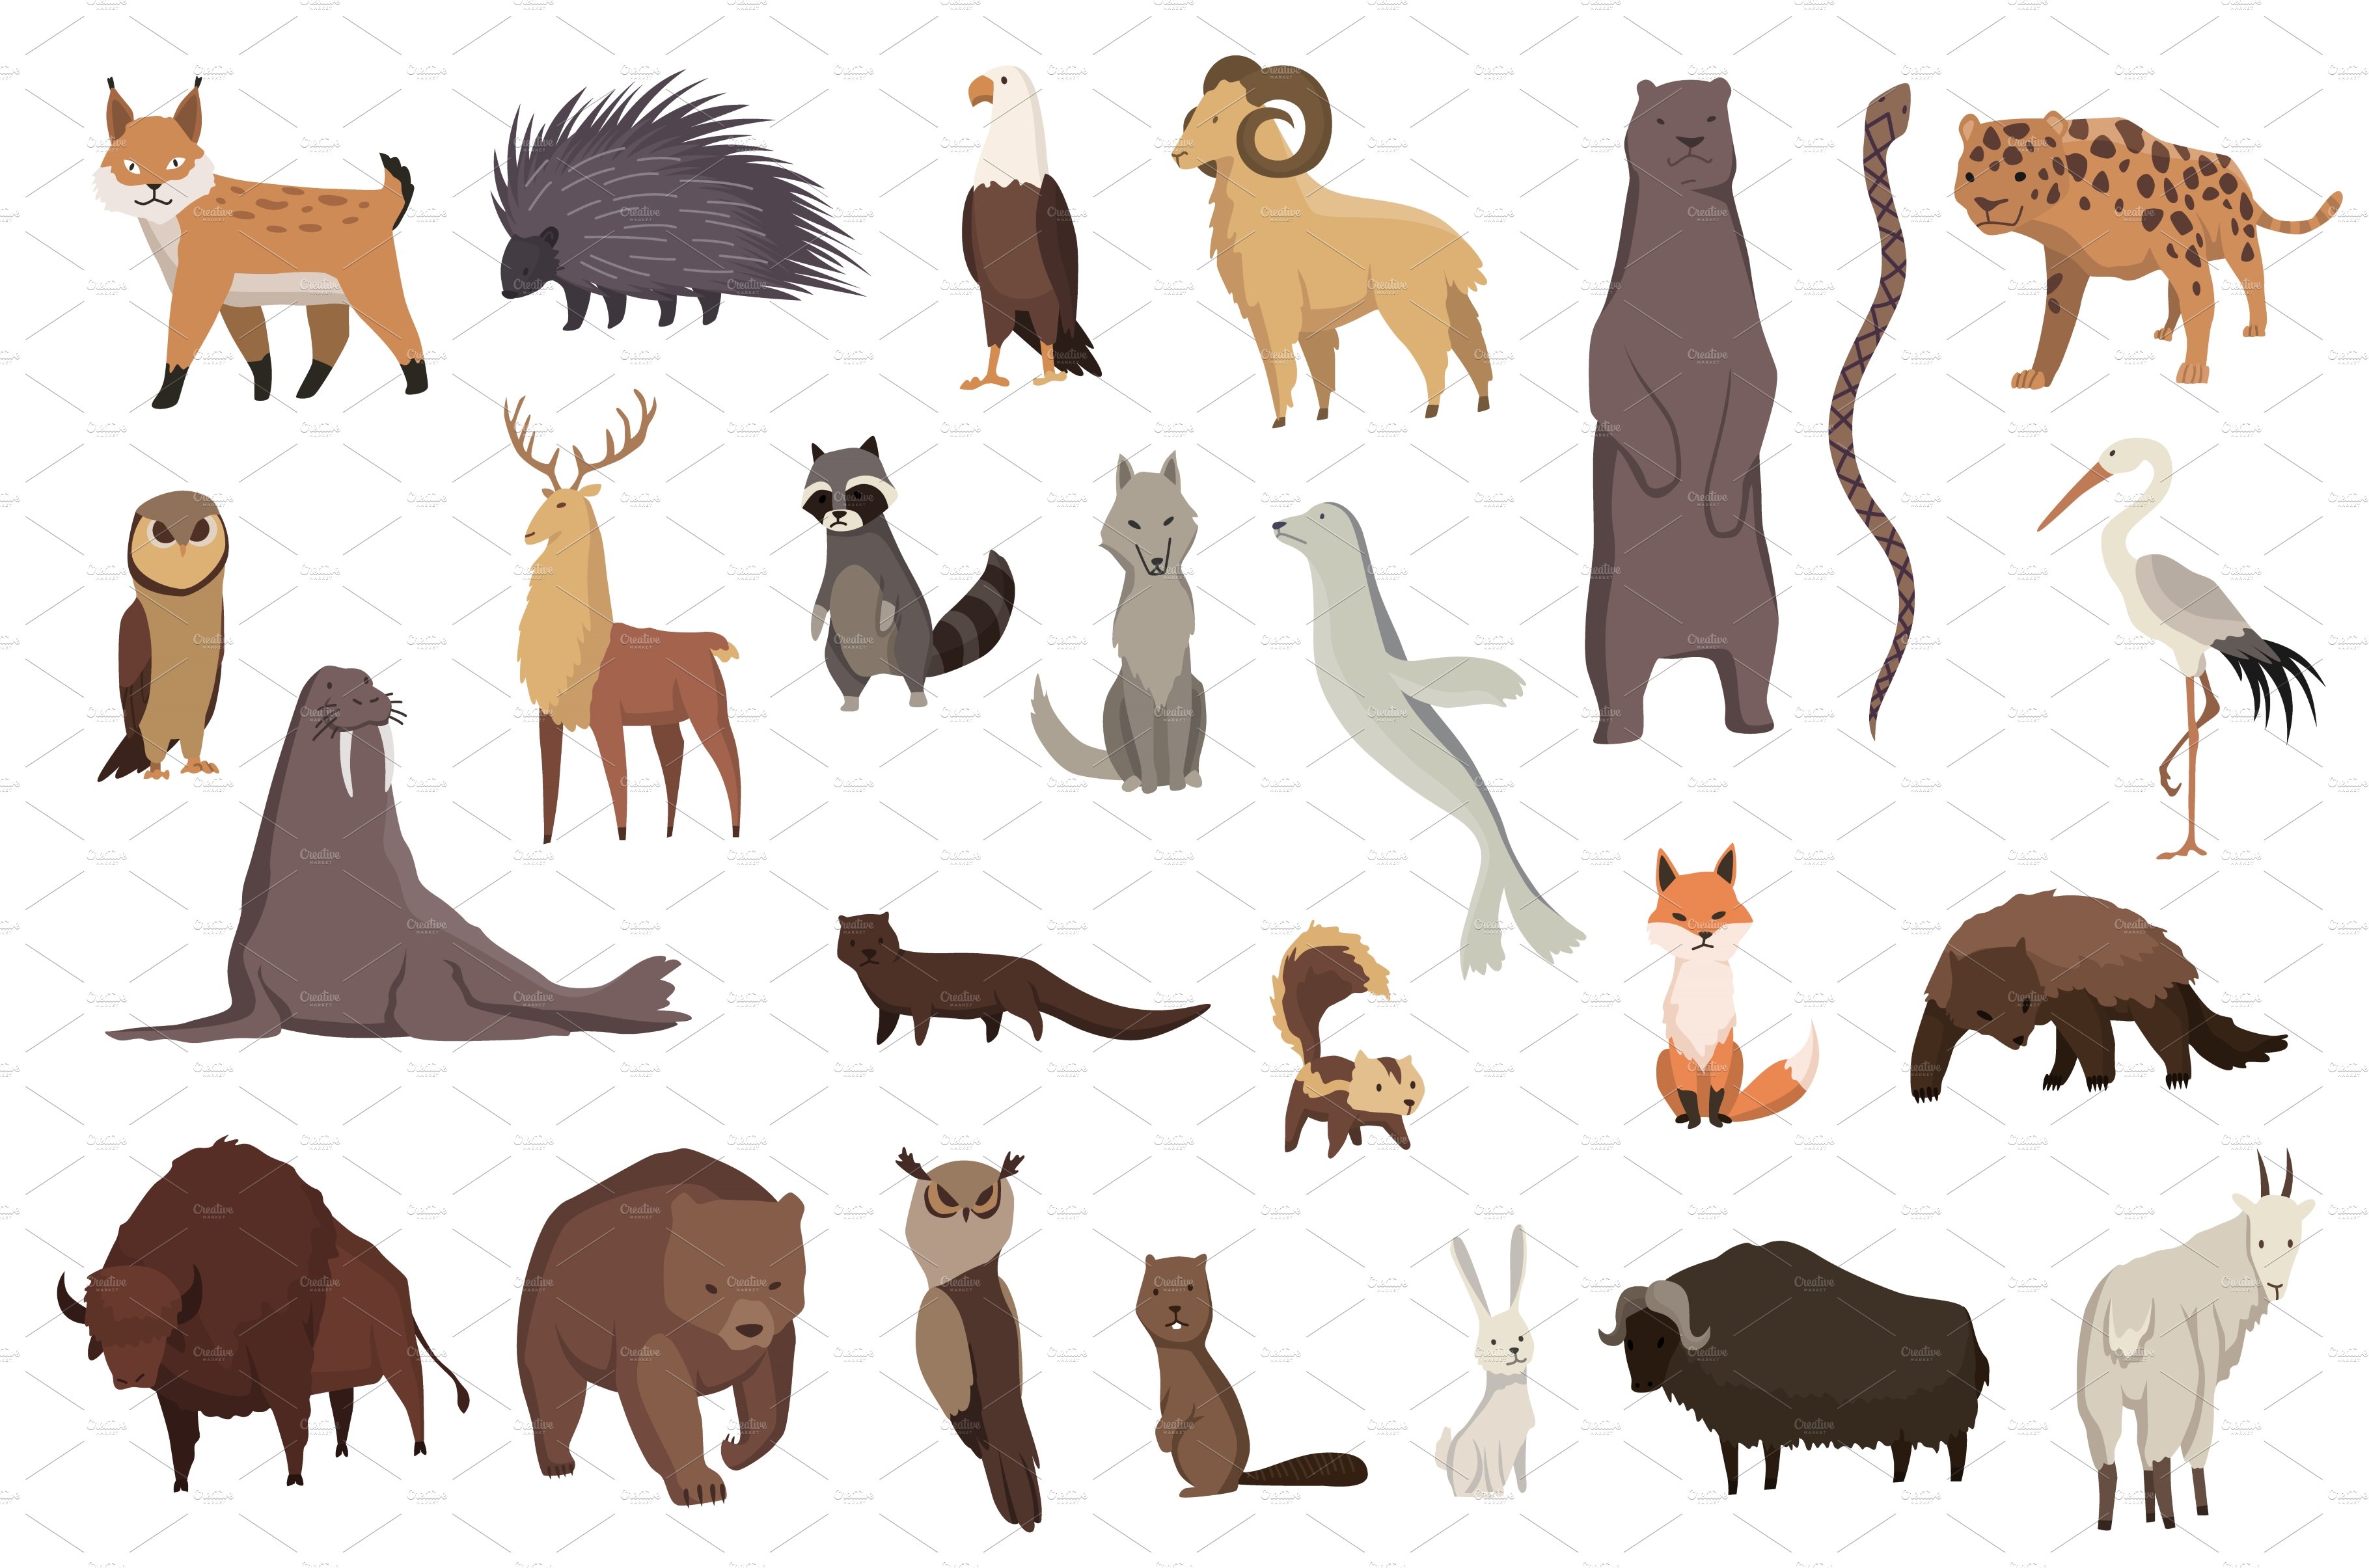 Animals of north america cover image.